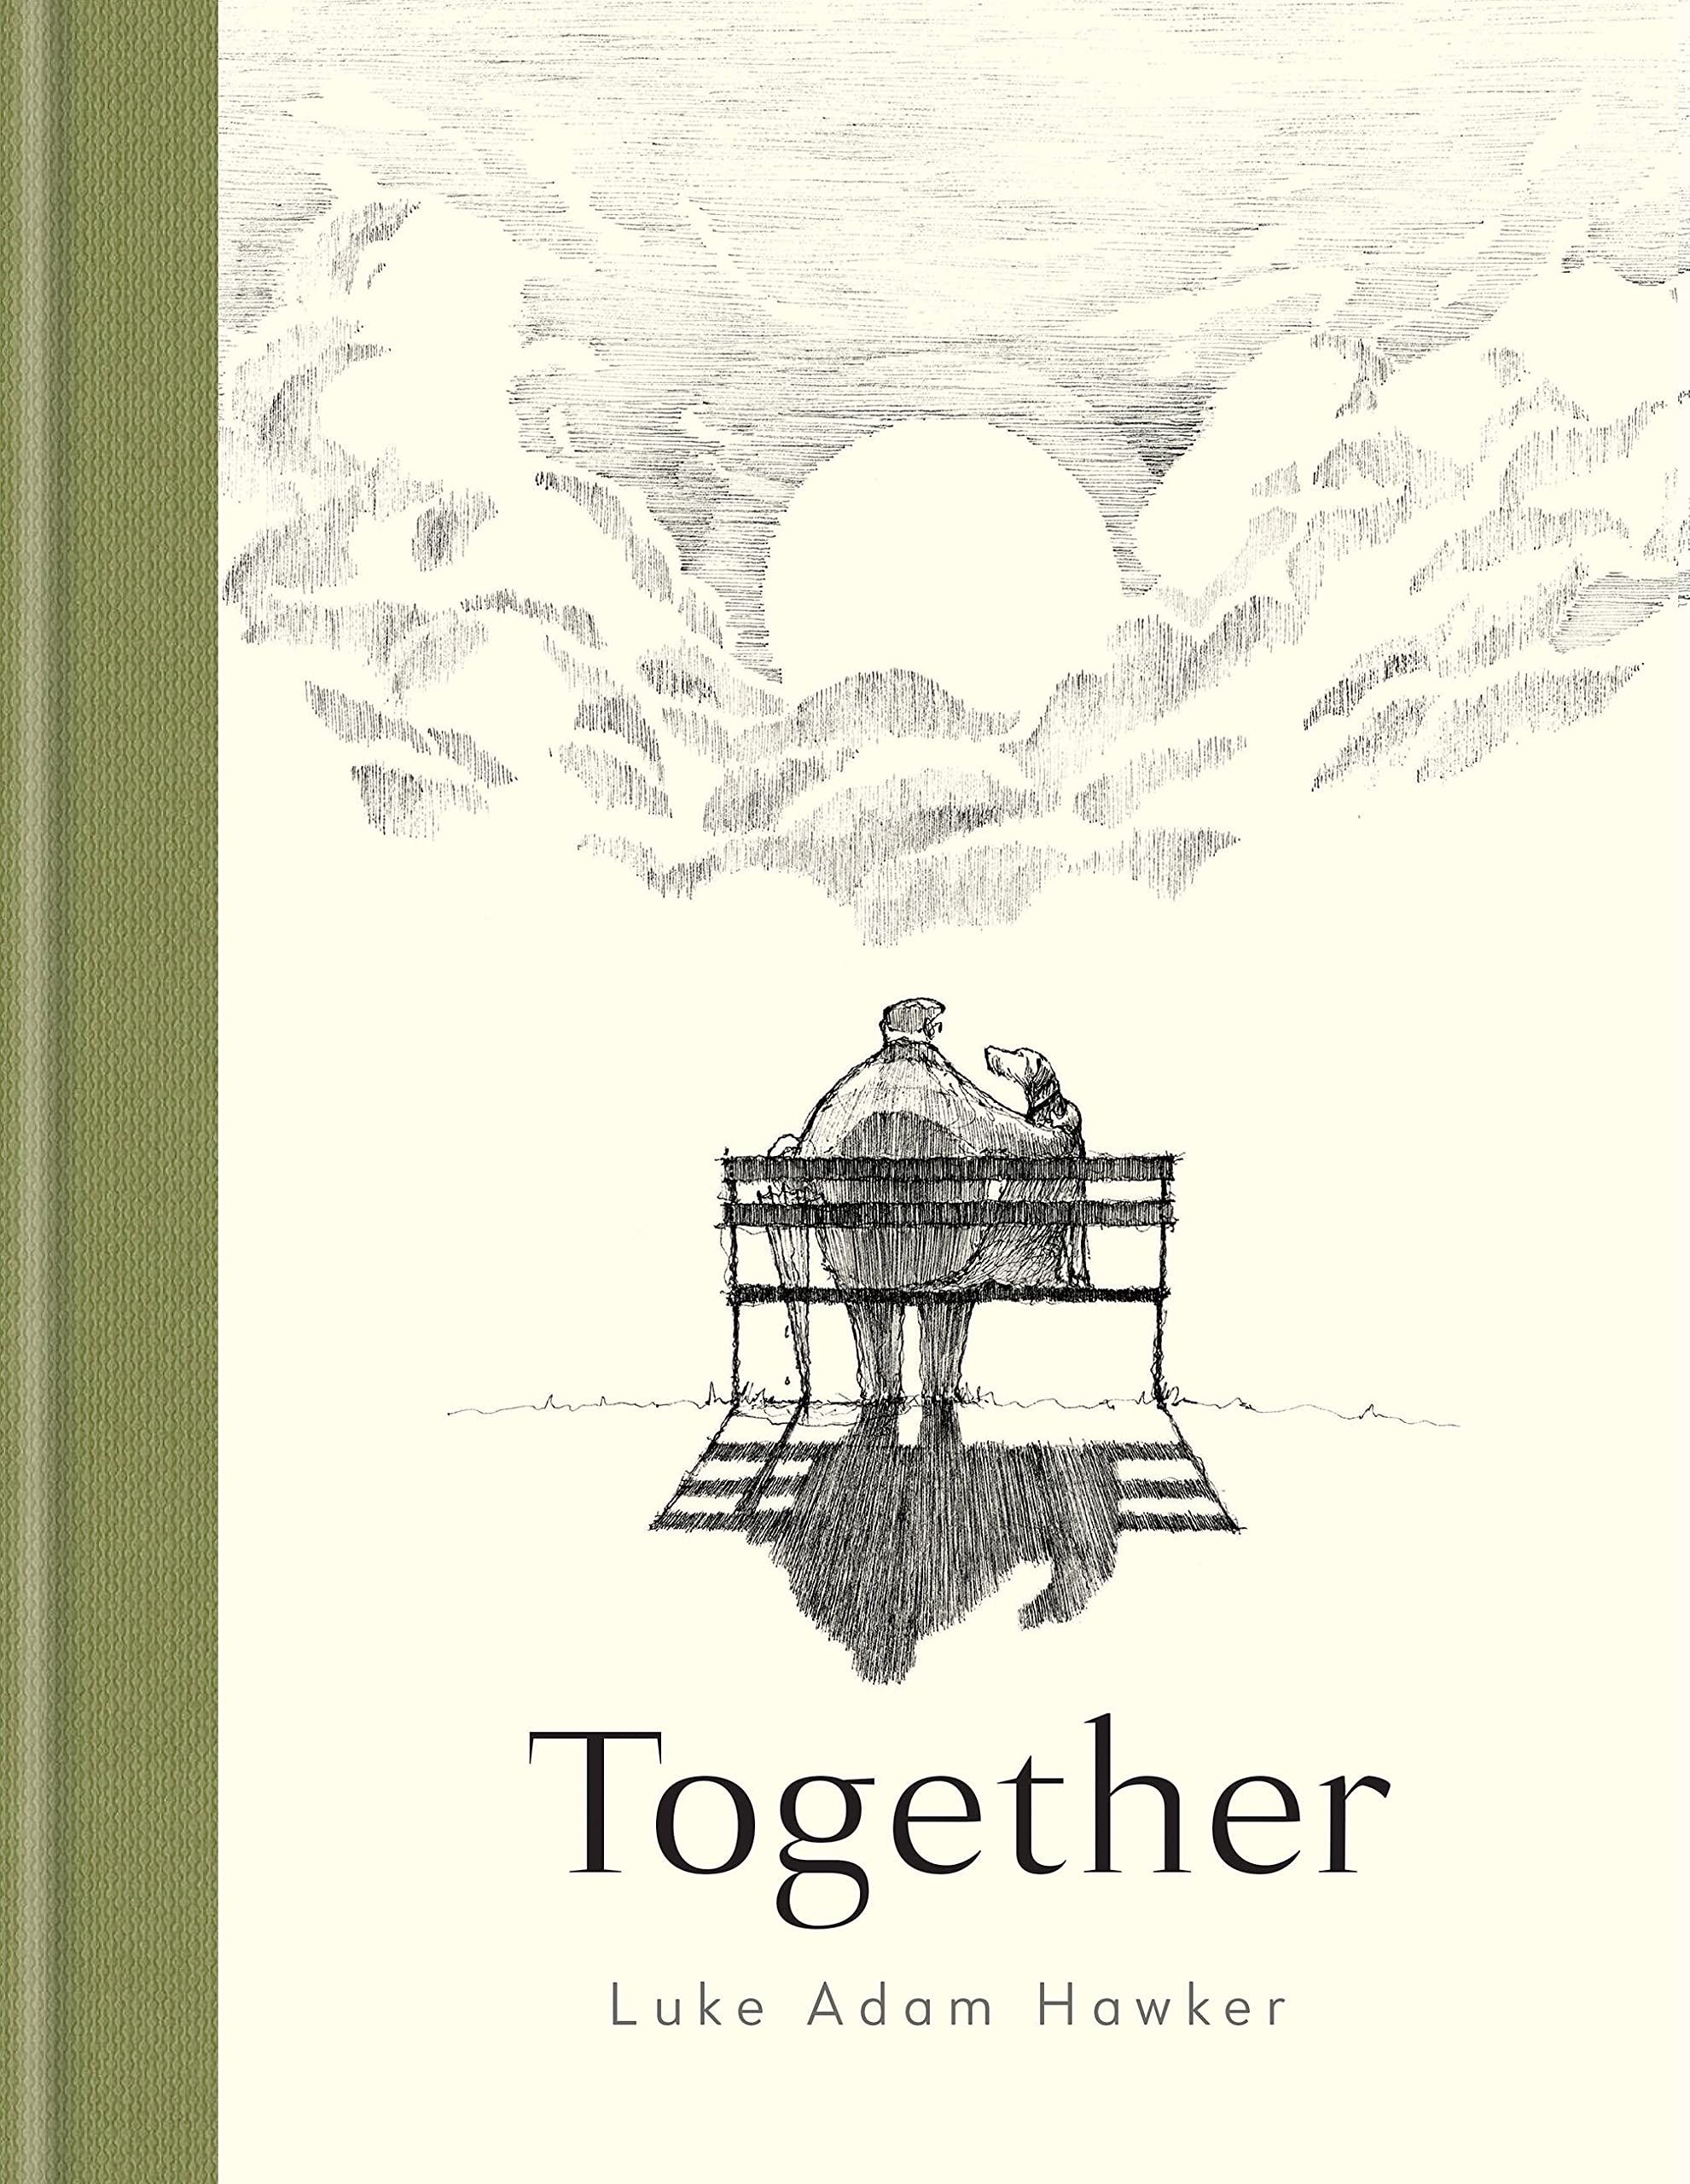 'Together' by Luke Adam Hawker